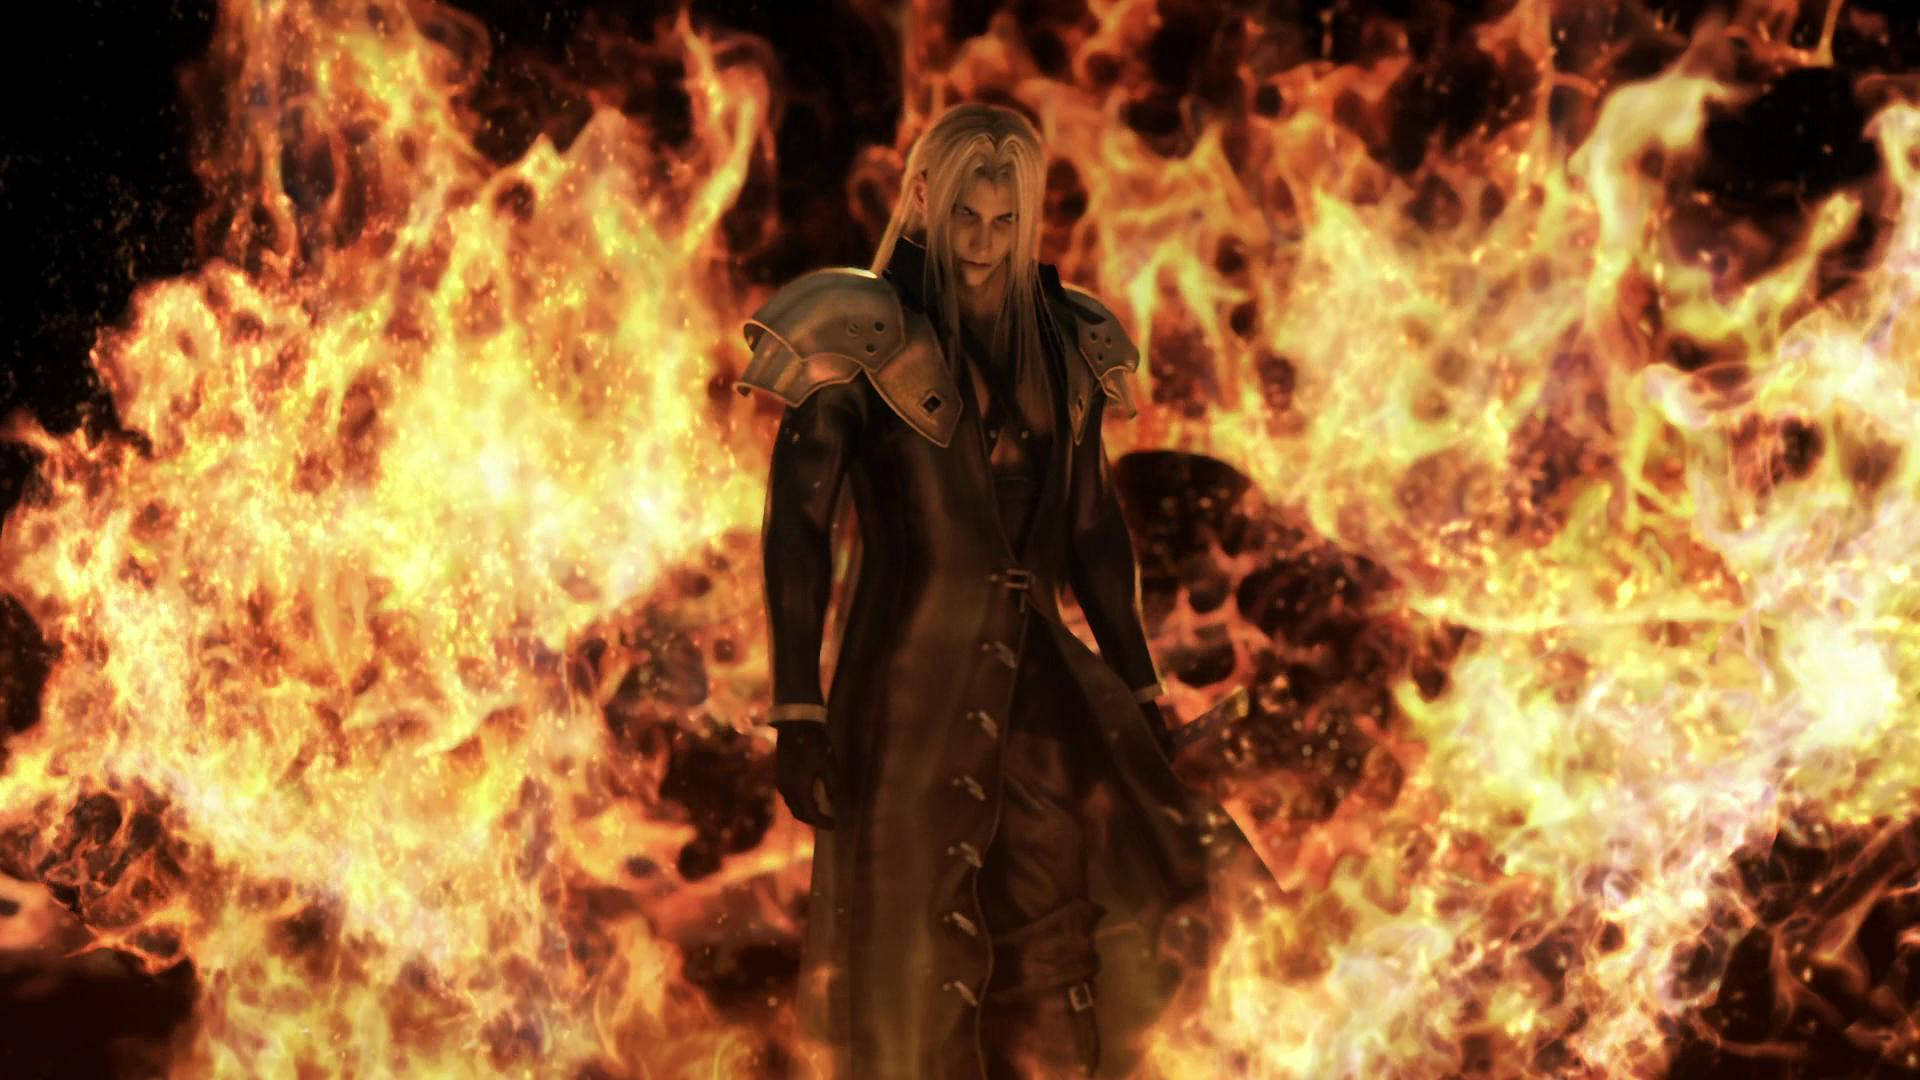 Sephiroth In Blazing Fire